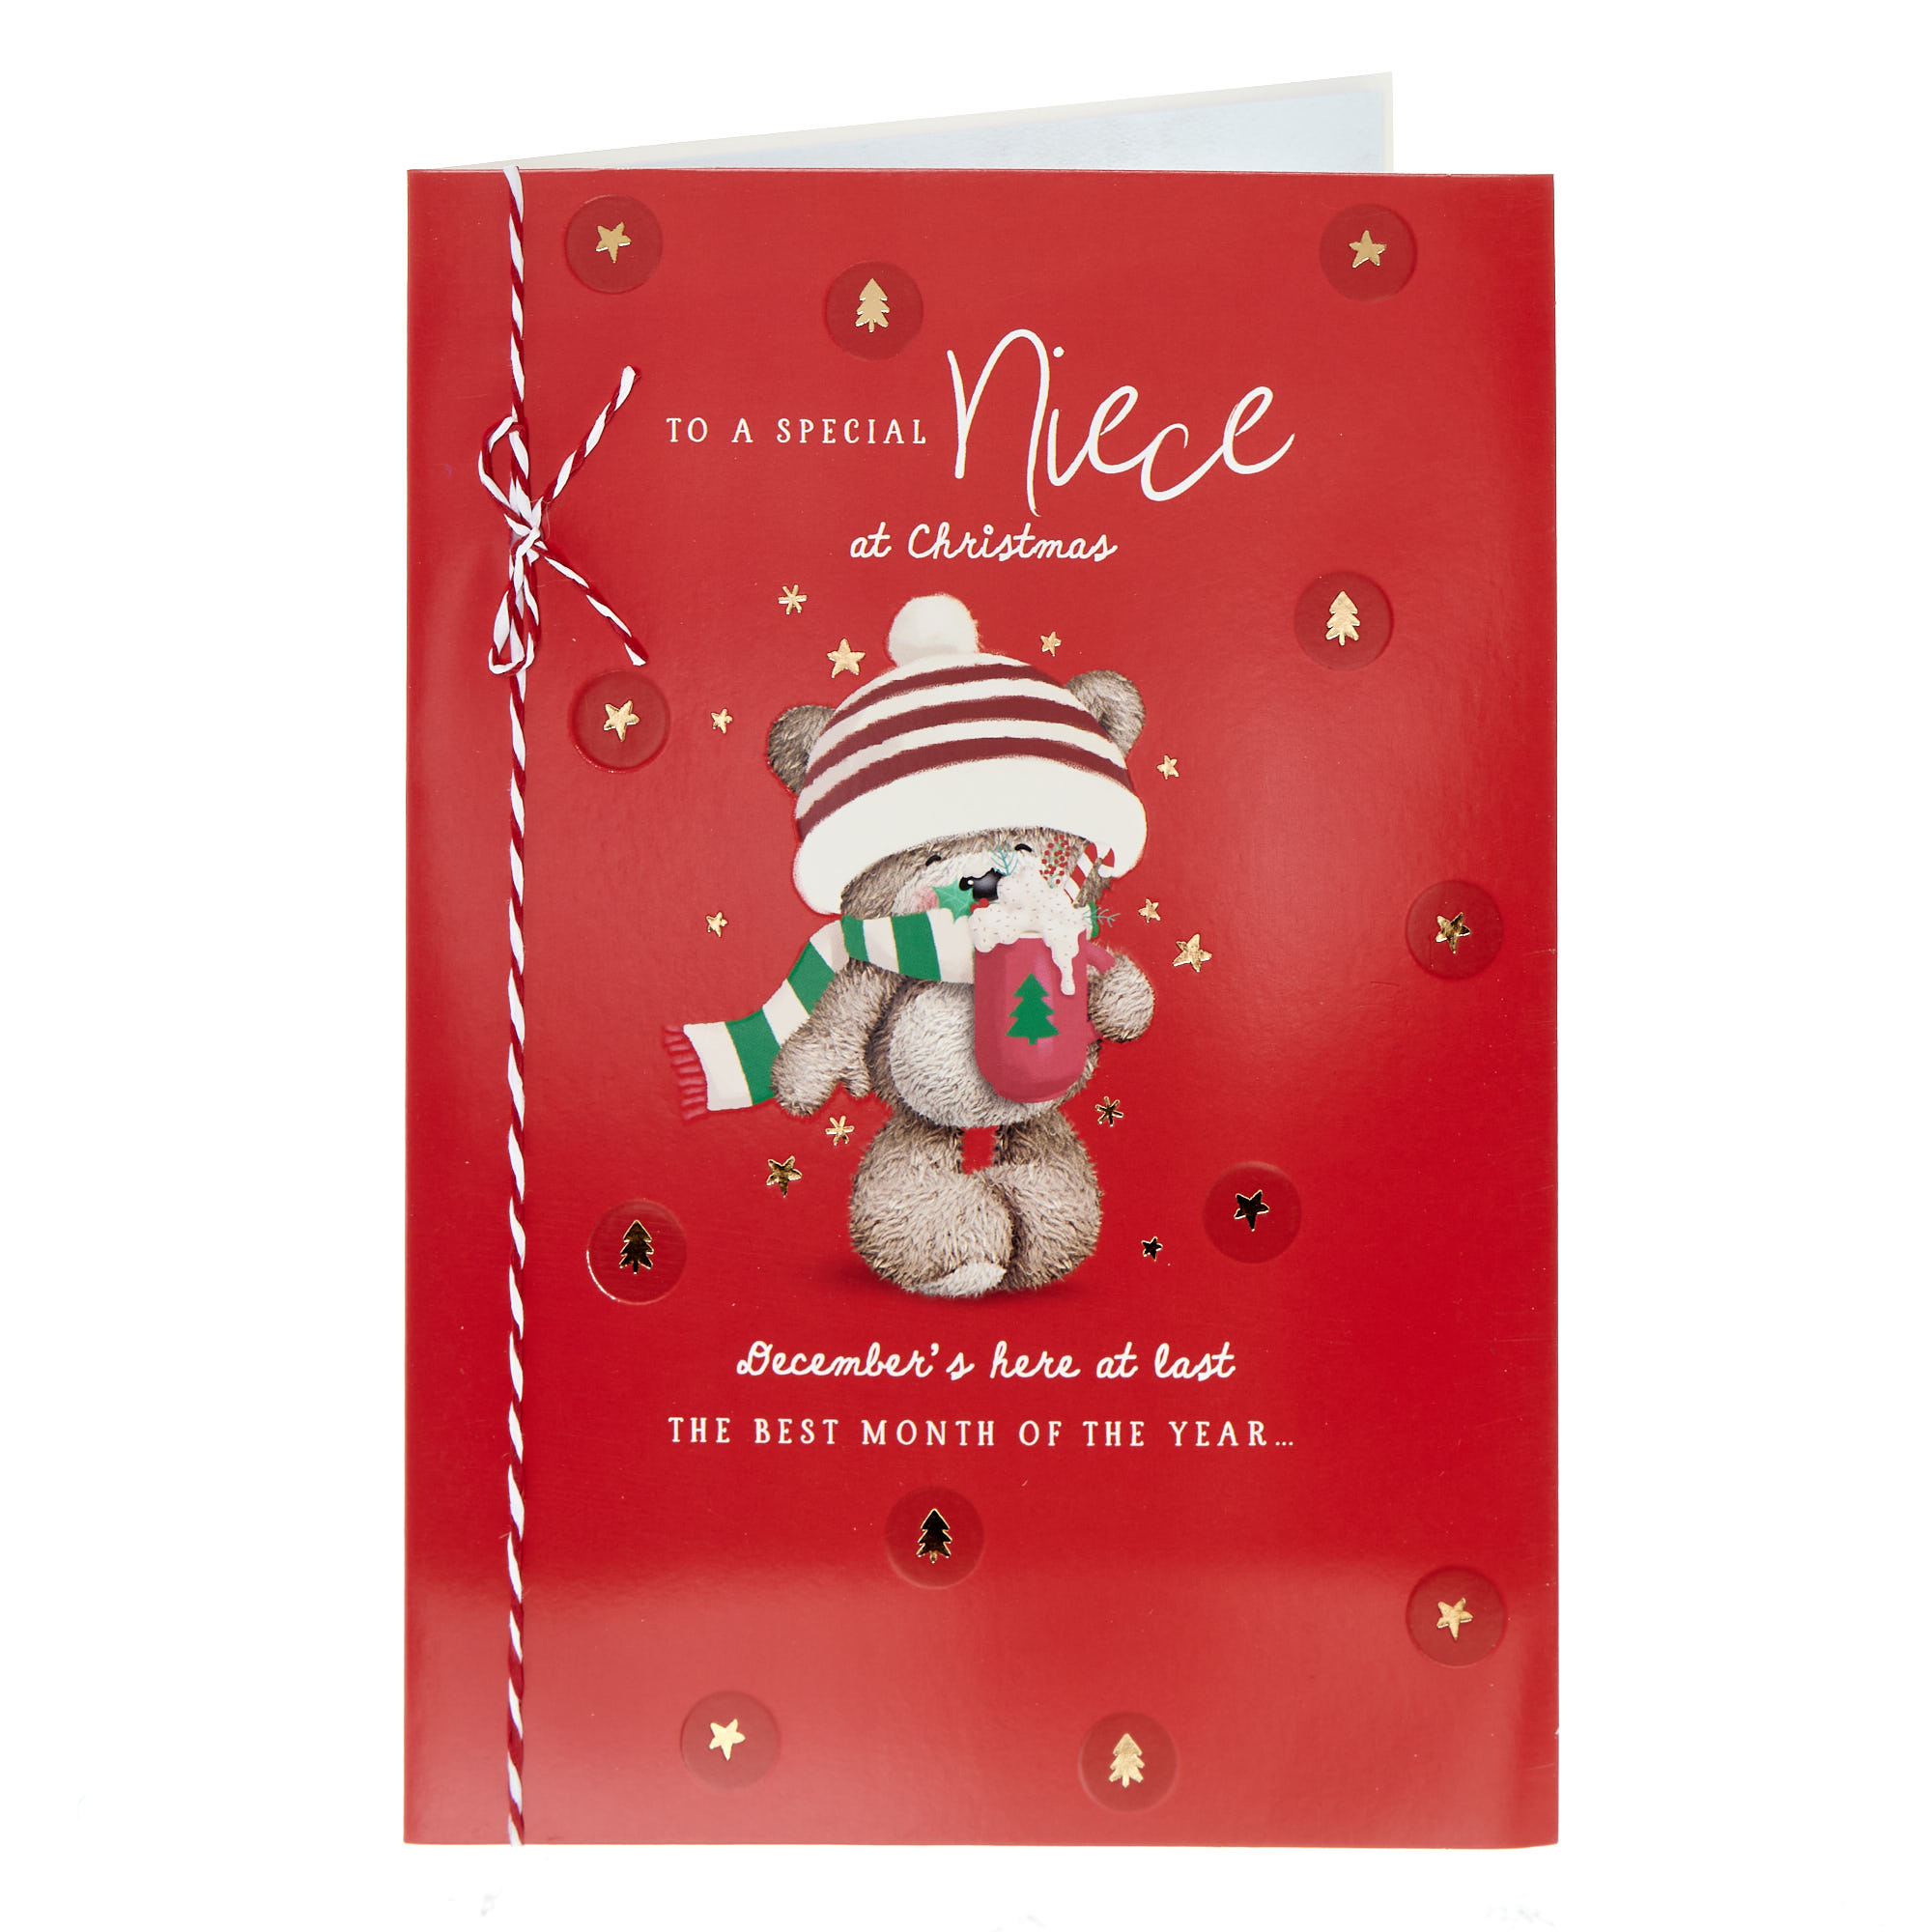 Niece December's Here Hugs Christmas Card